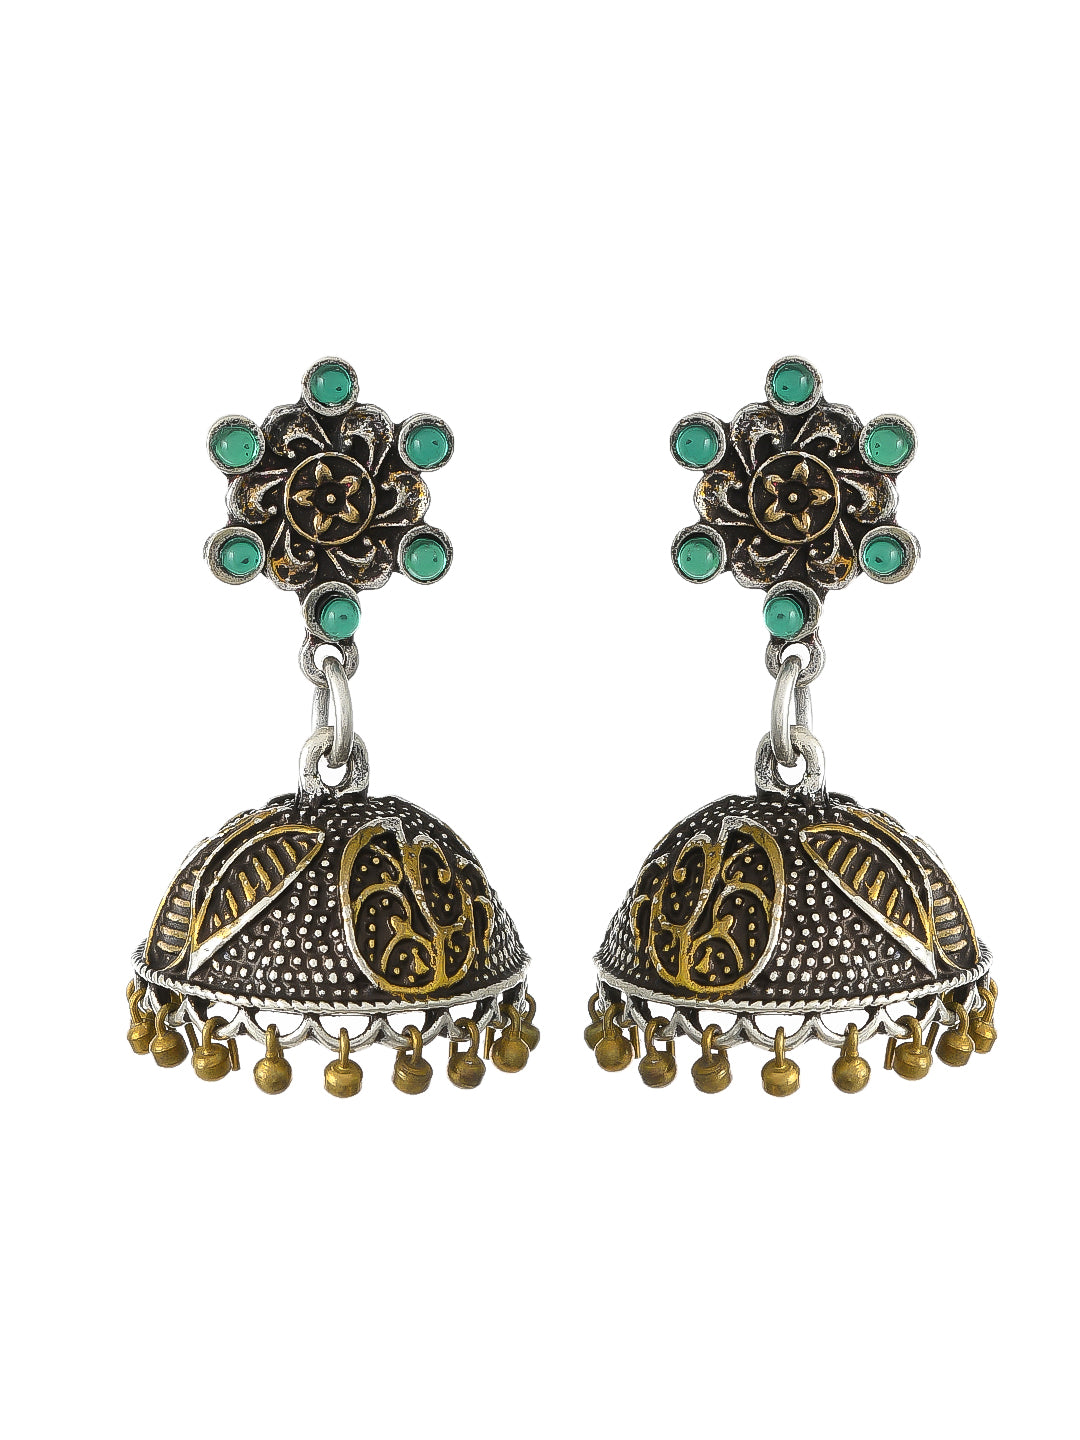 Oxidised silver jhumki earrings